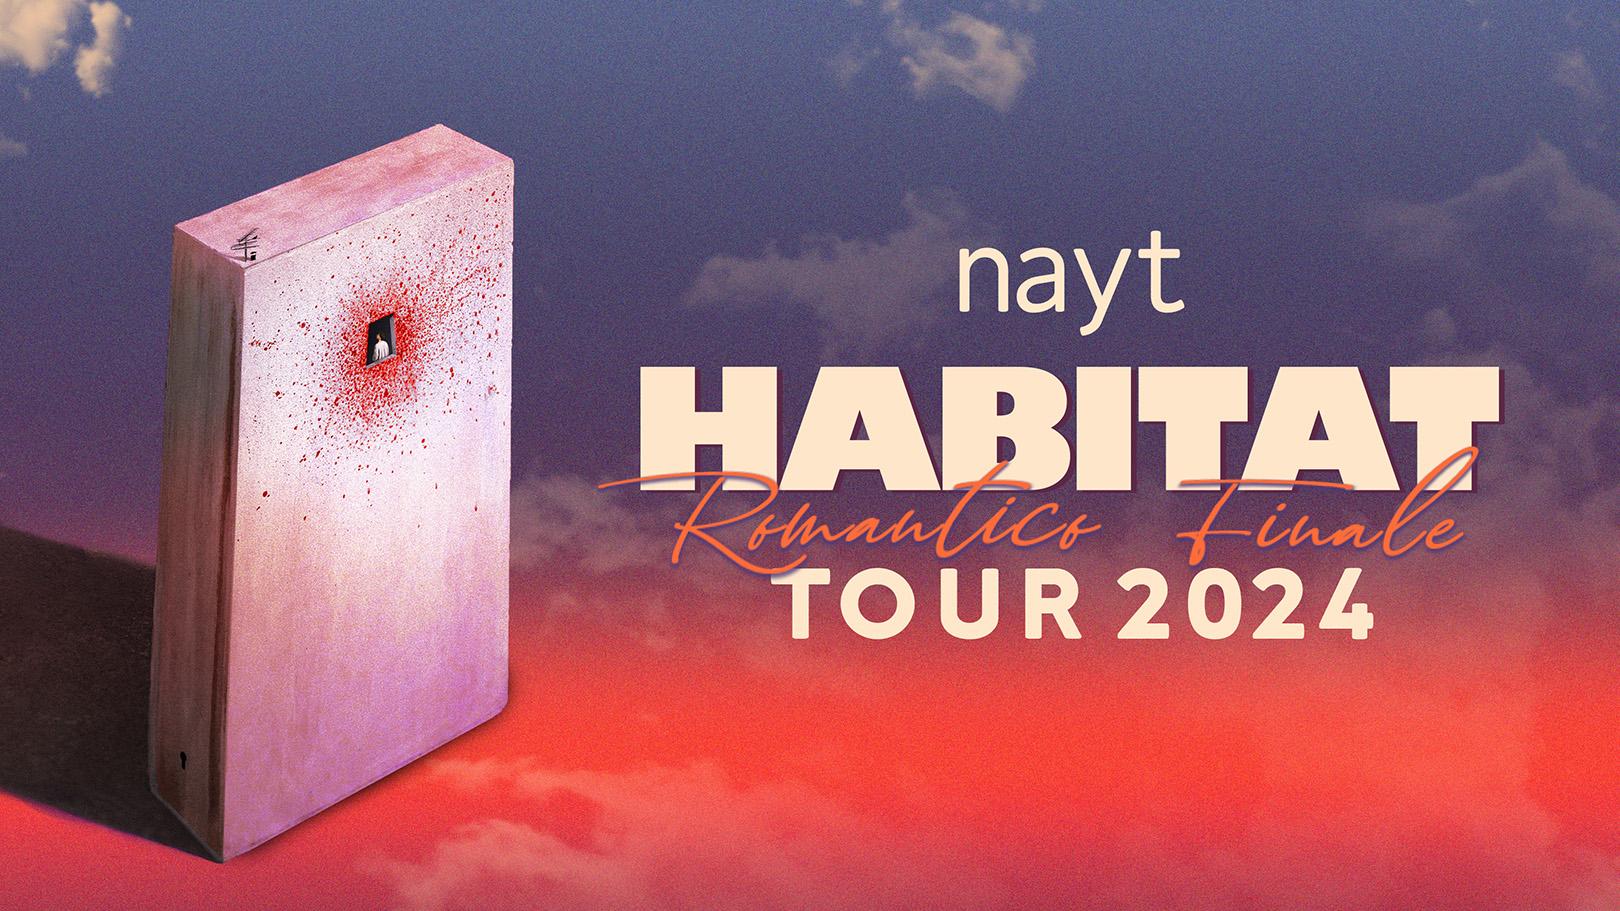 Habitat Tour 2024 Romantico Finale